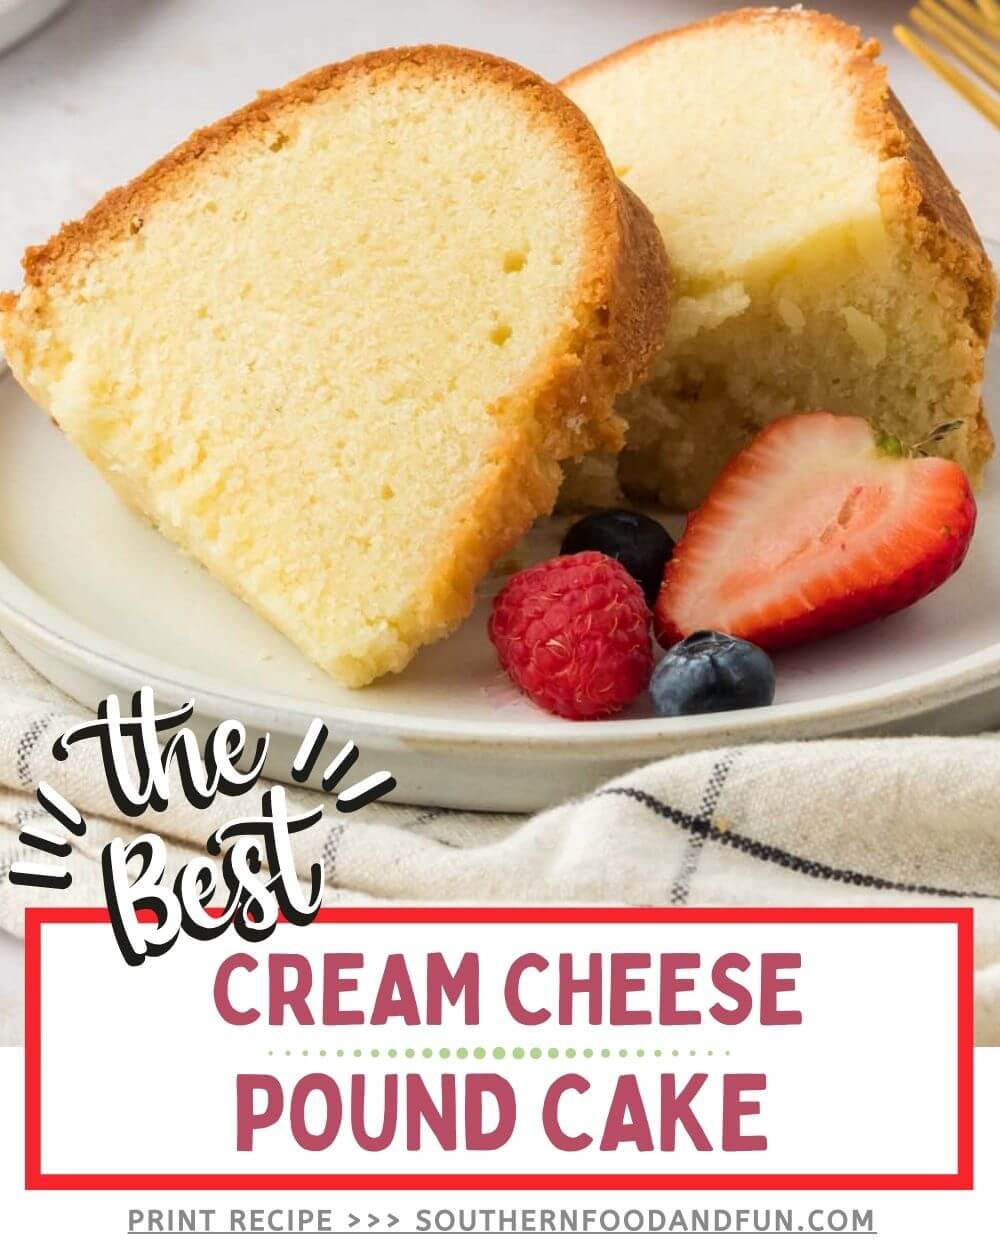 https://southernfoodandfun.com/wp-content/uploads/2023/05/FB-cream-cheese-pound-cake.jpg